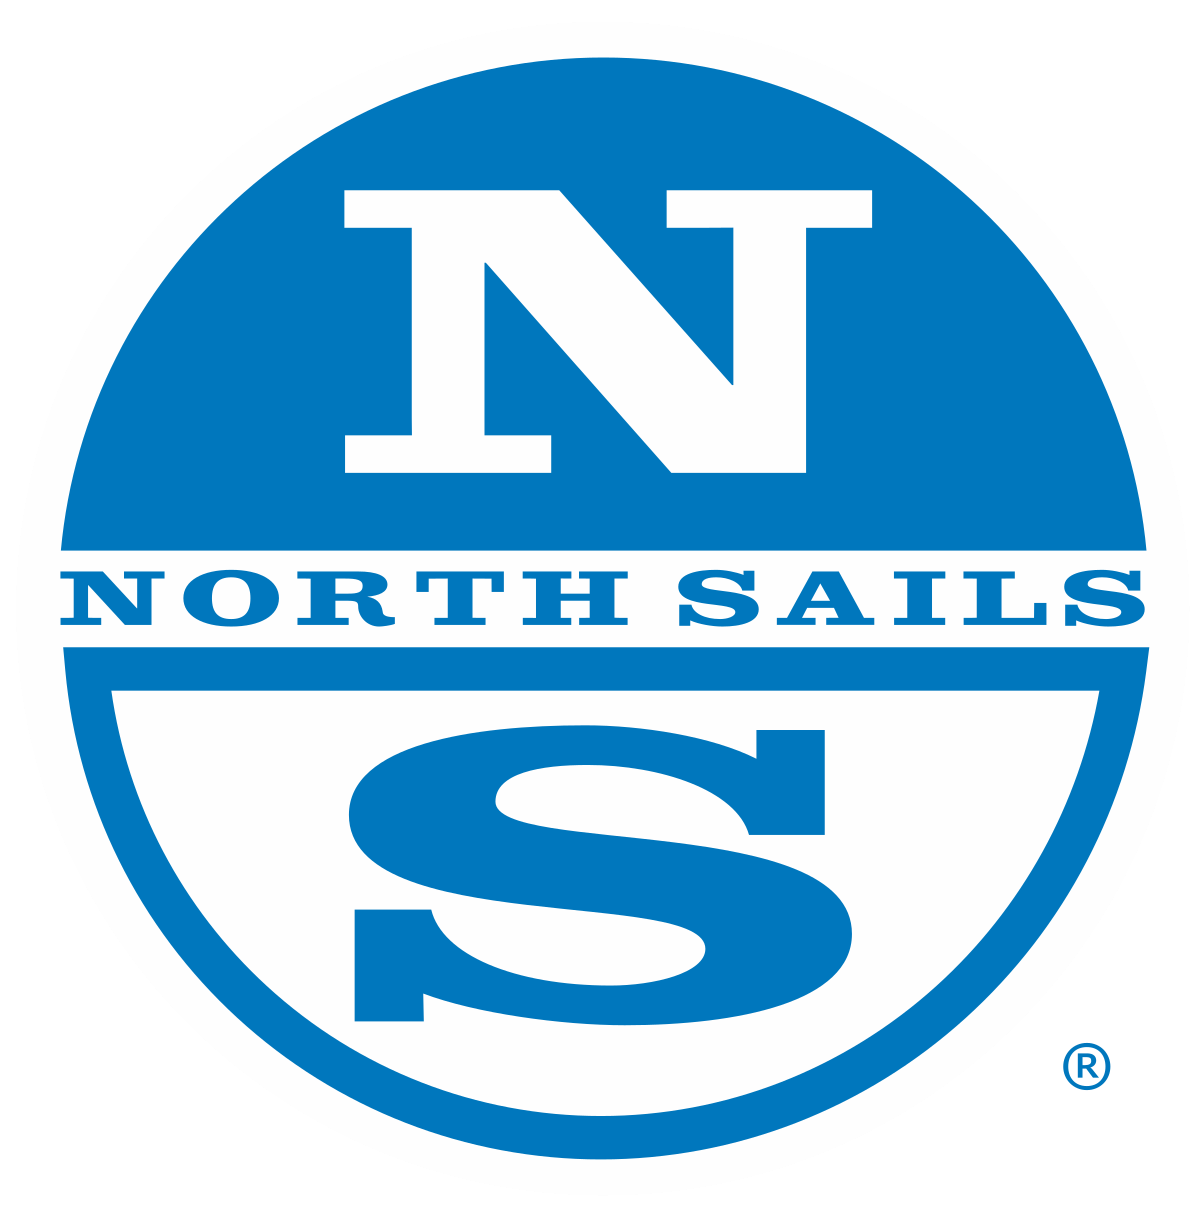 NORTH SAILS Coupons & Promo Codes